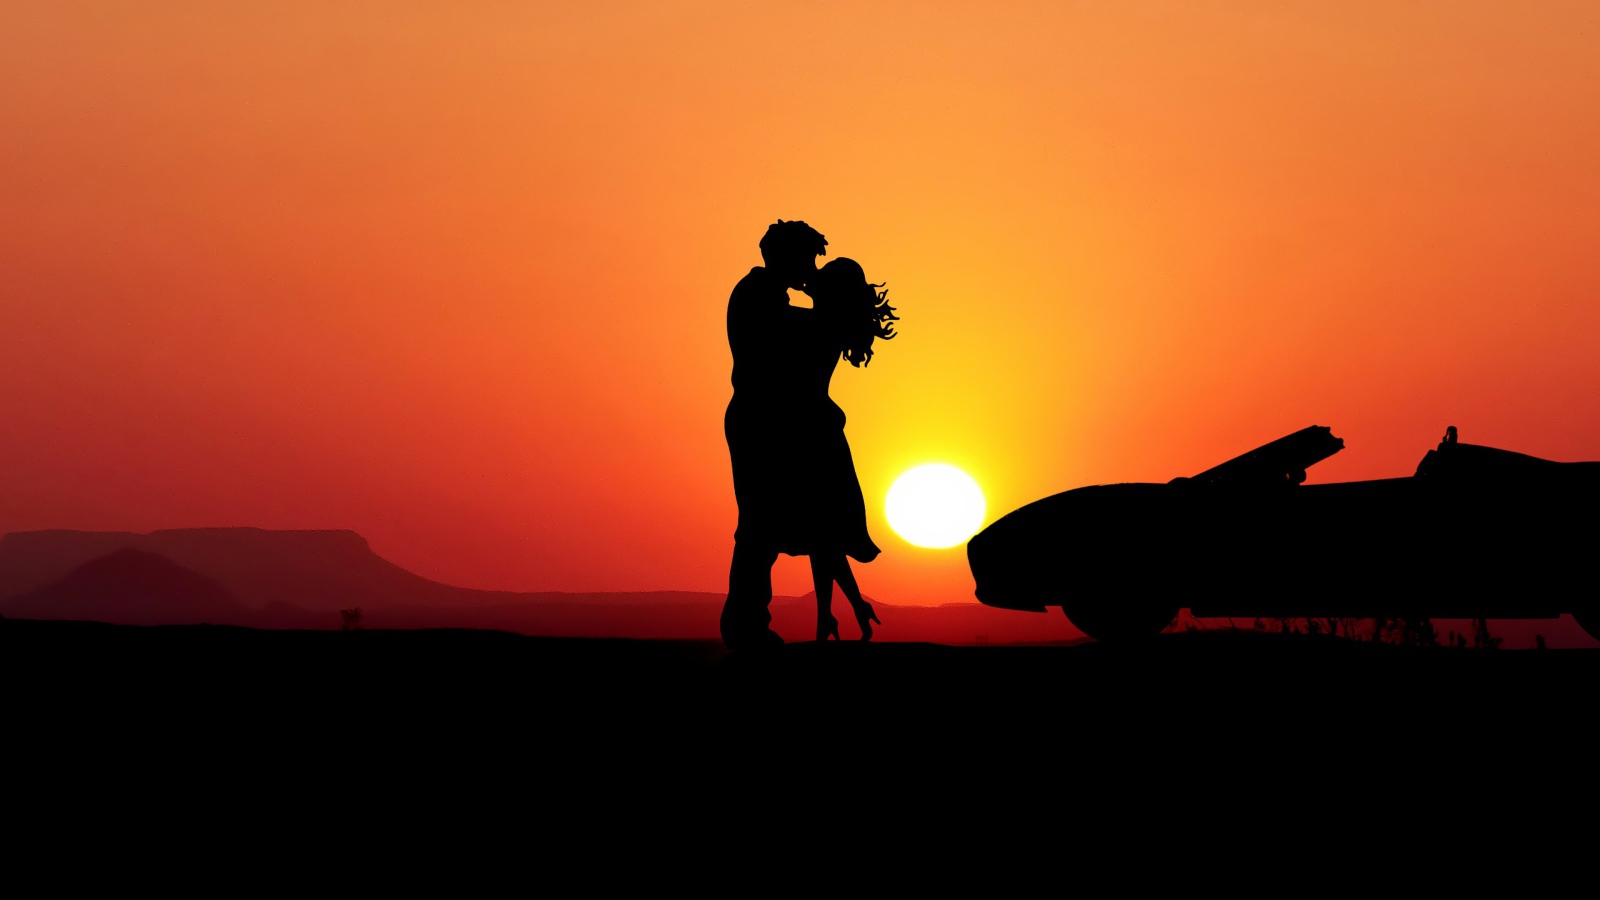 Целующаяся пара на фоне заката с автомобилем